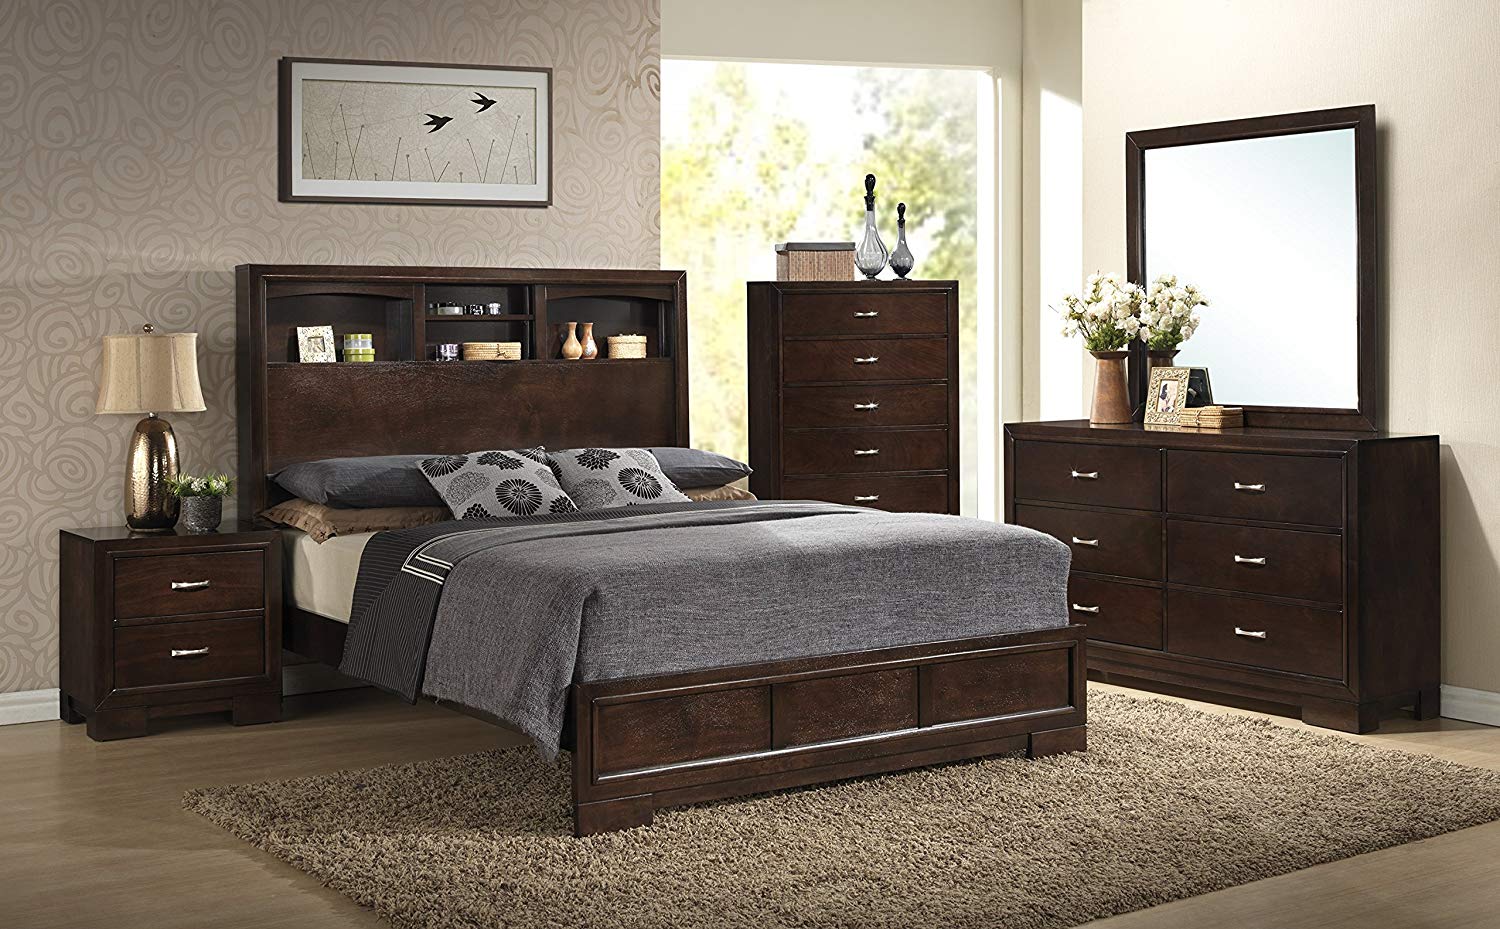 b&q bedroom furniture set